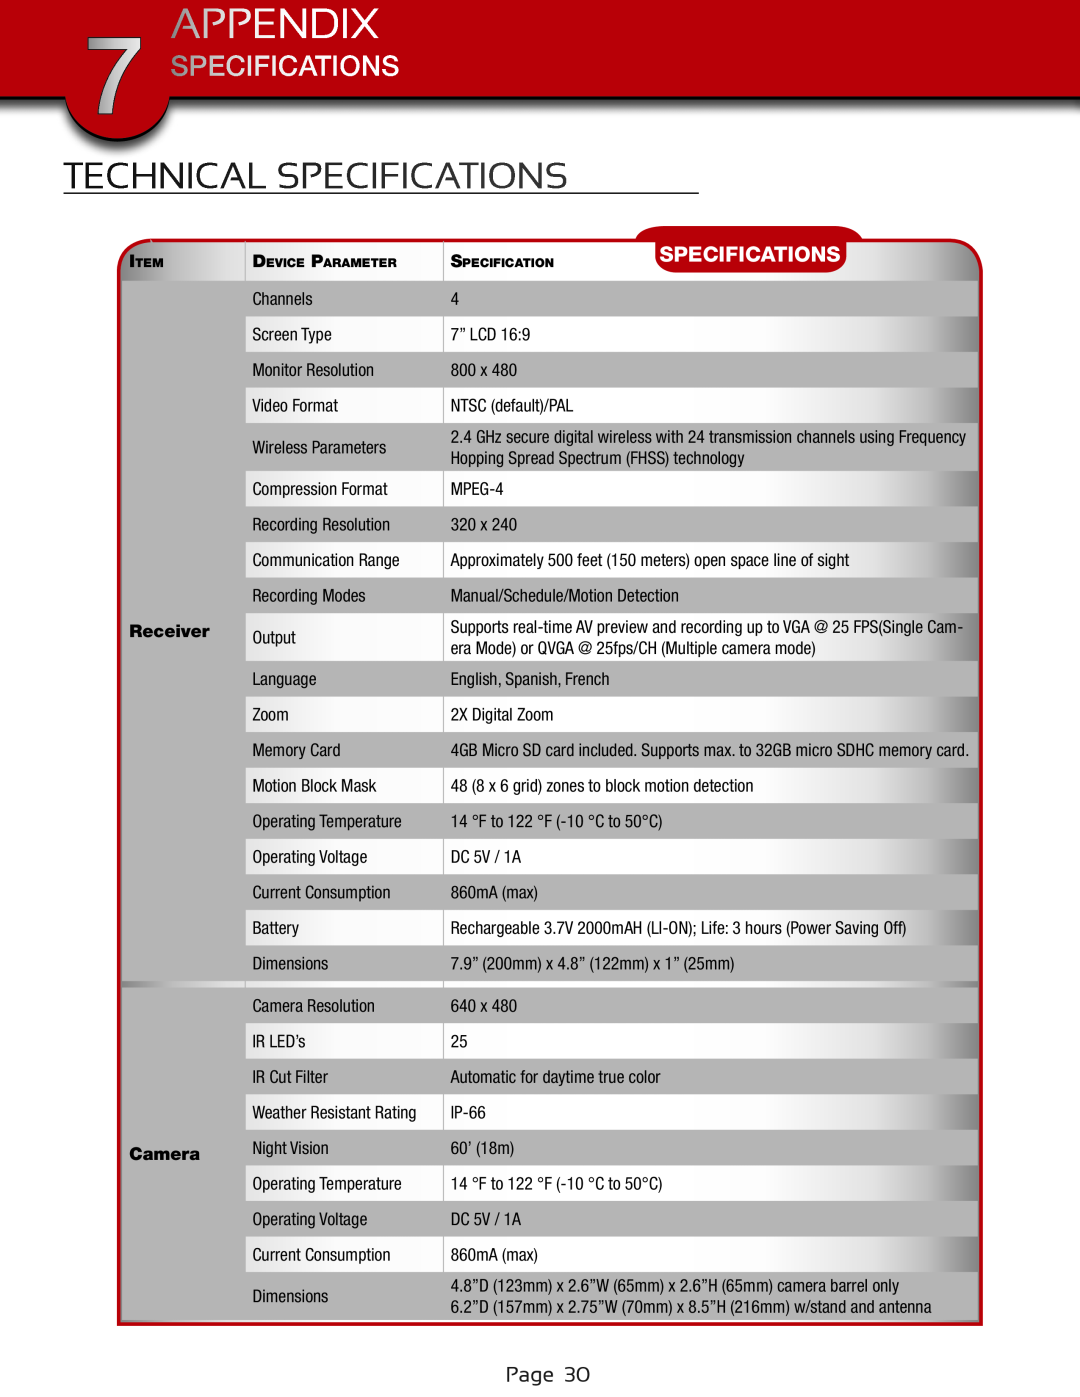 First Alert DWS-472, DWS-471 user manual Technical Specifications, Appendix, SpecificationSPECIFICATIONS, Receiver Camera 